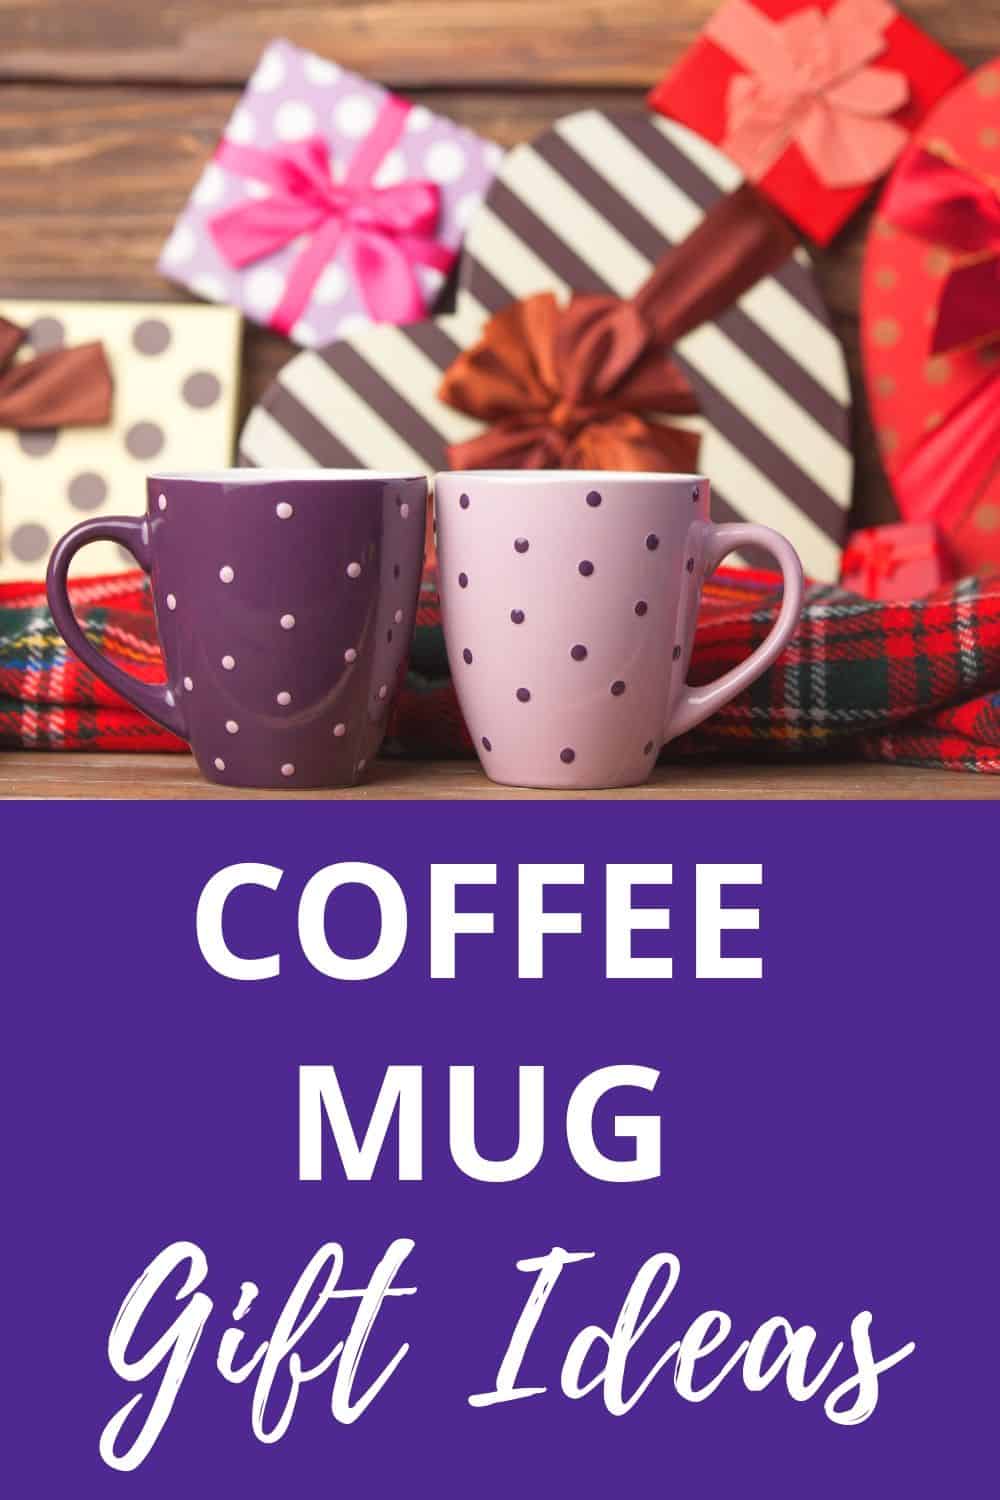 Everlasting Joy Mug - great gift idea